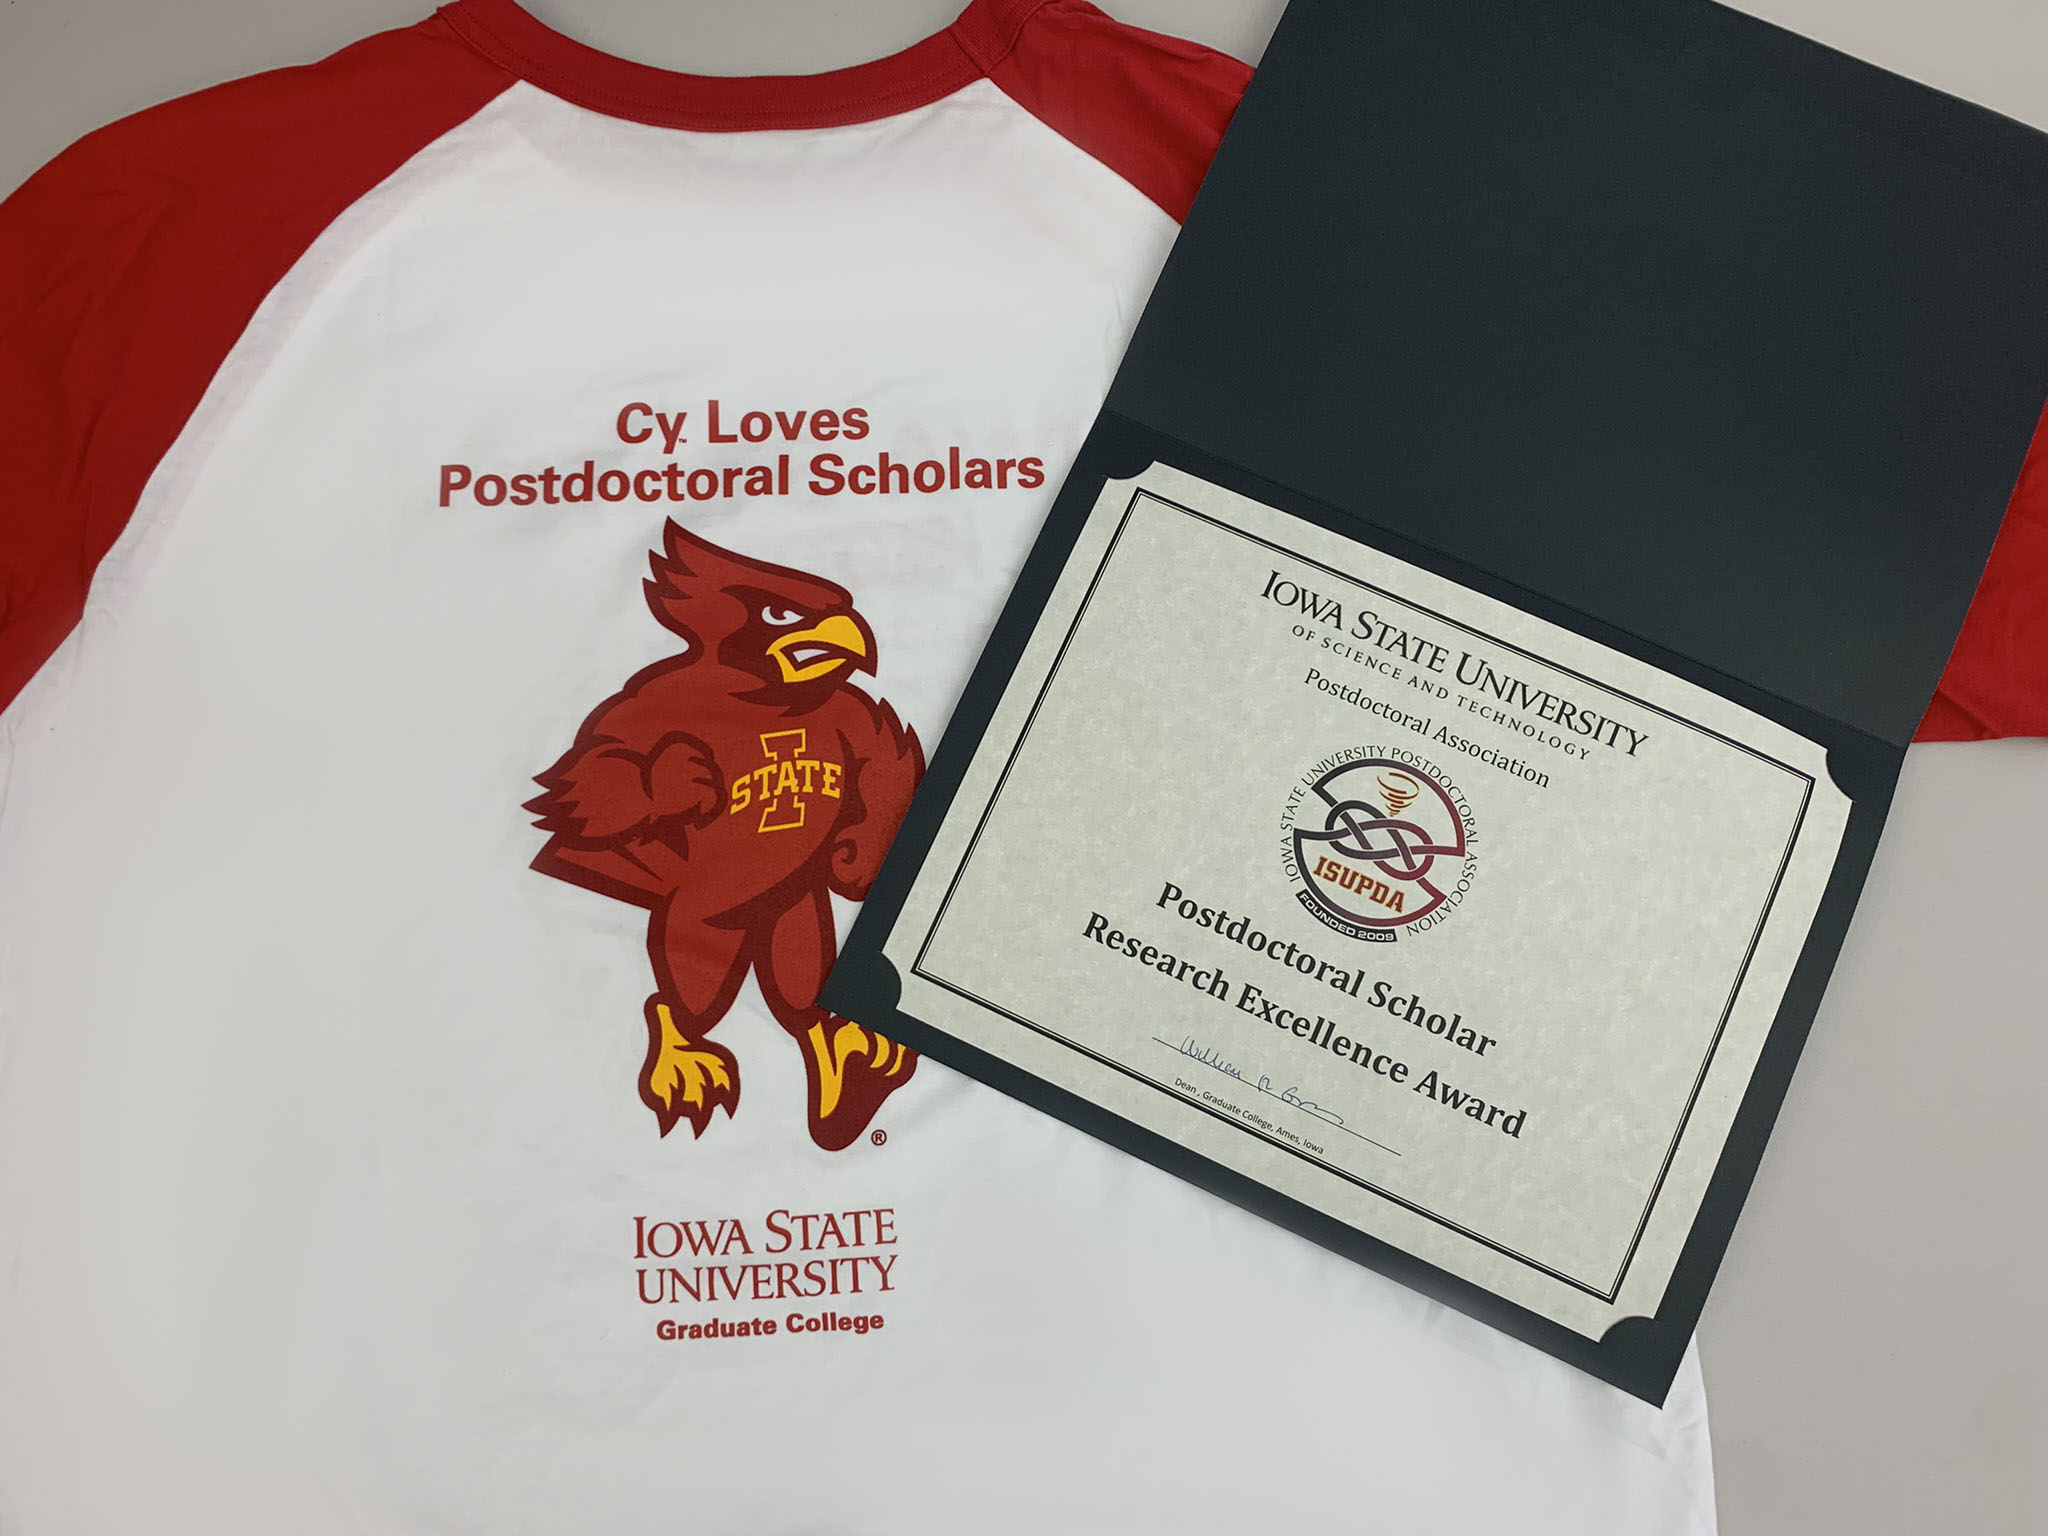 Postdoctoral Research Award on shirt